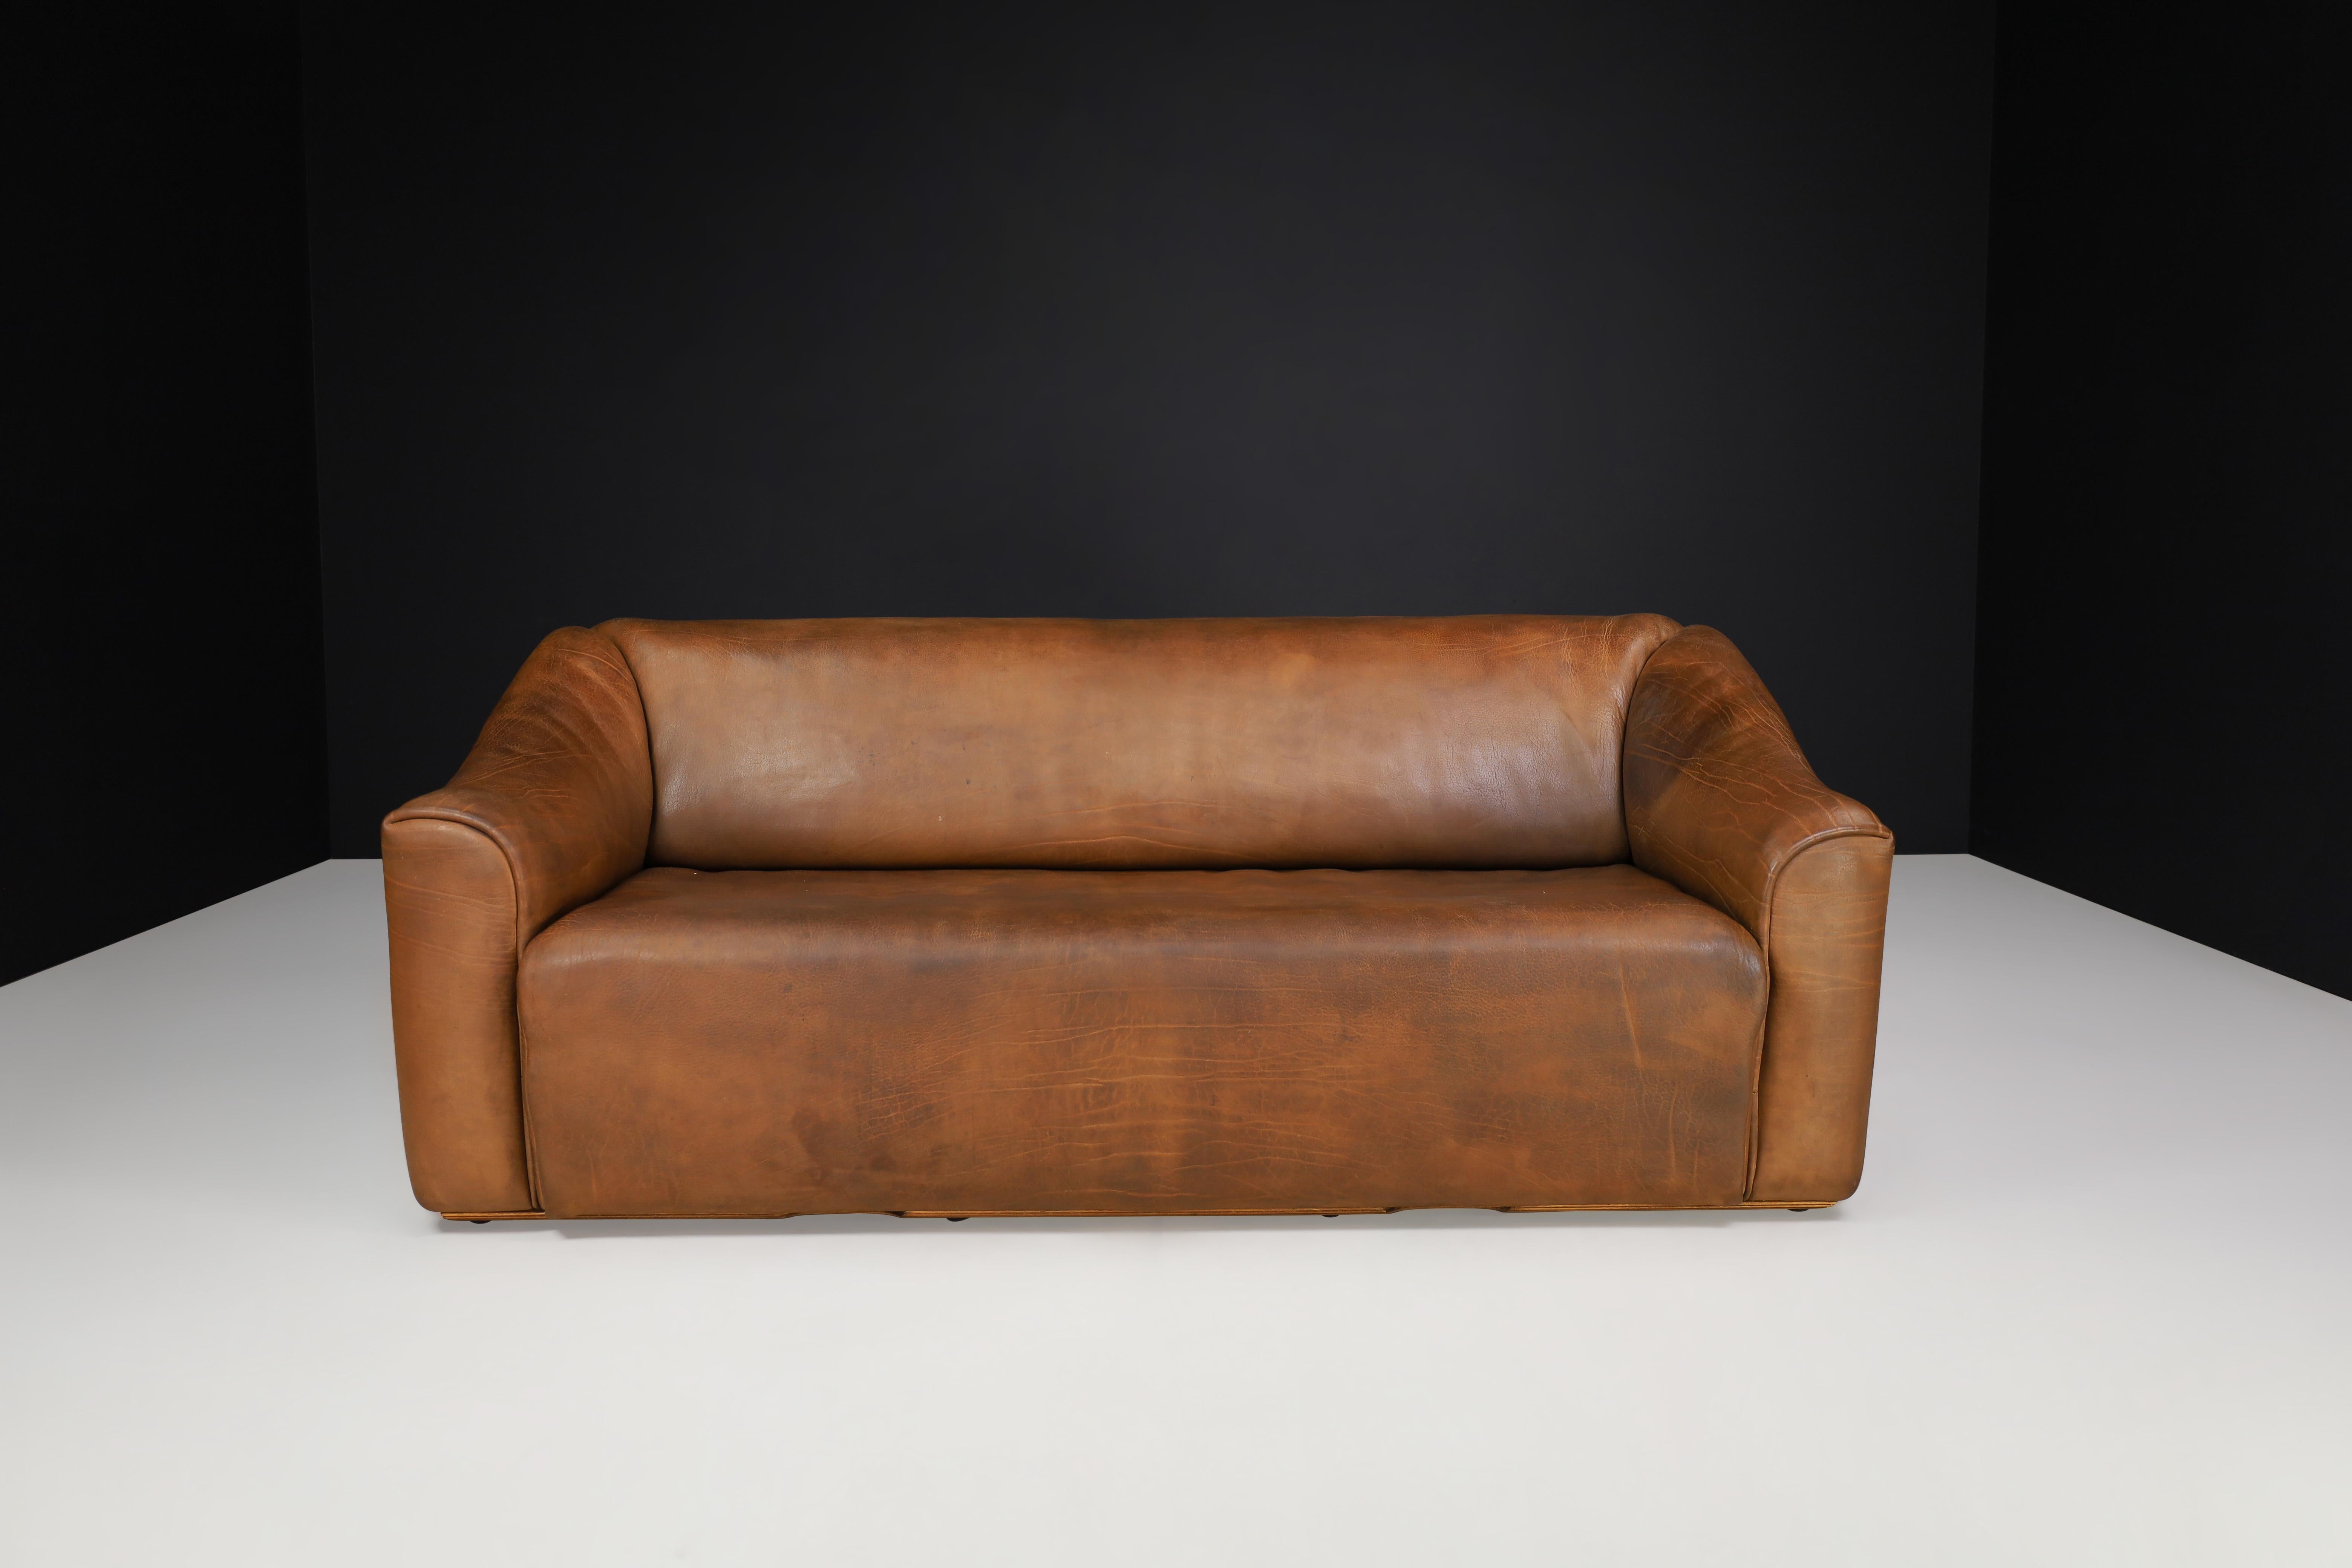 Swiss De Sede DS-47 Neck Leather Sofa from Switzerland 1970s  